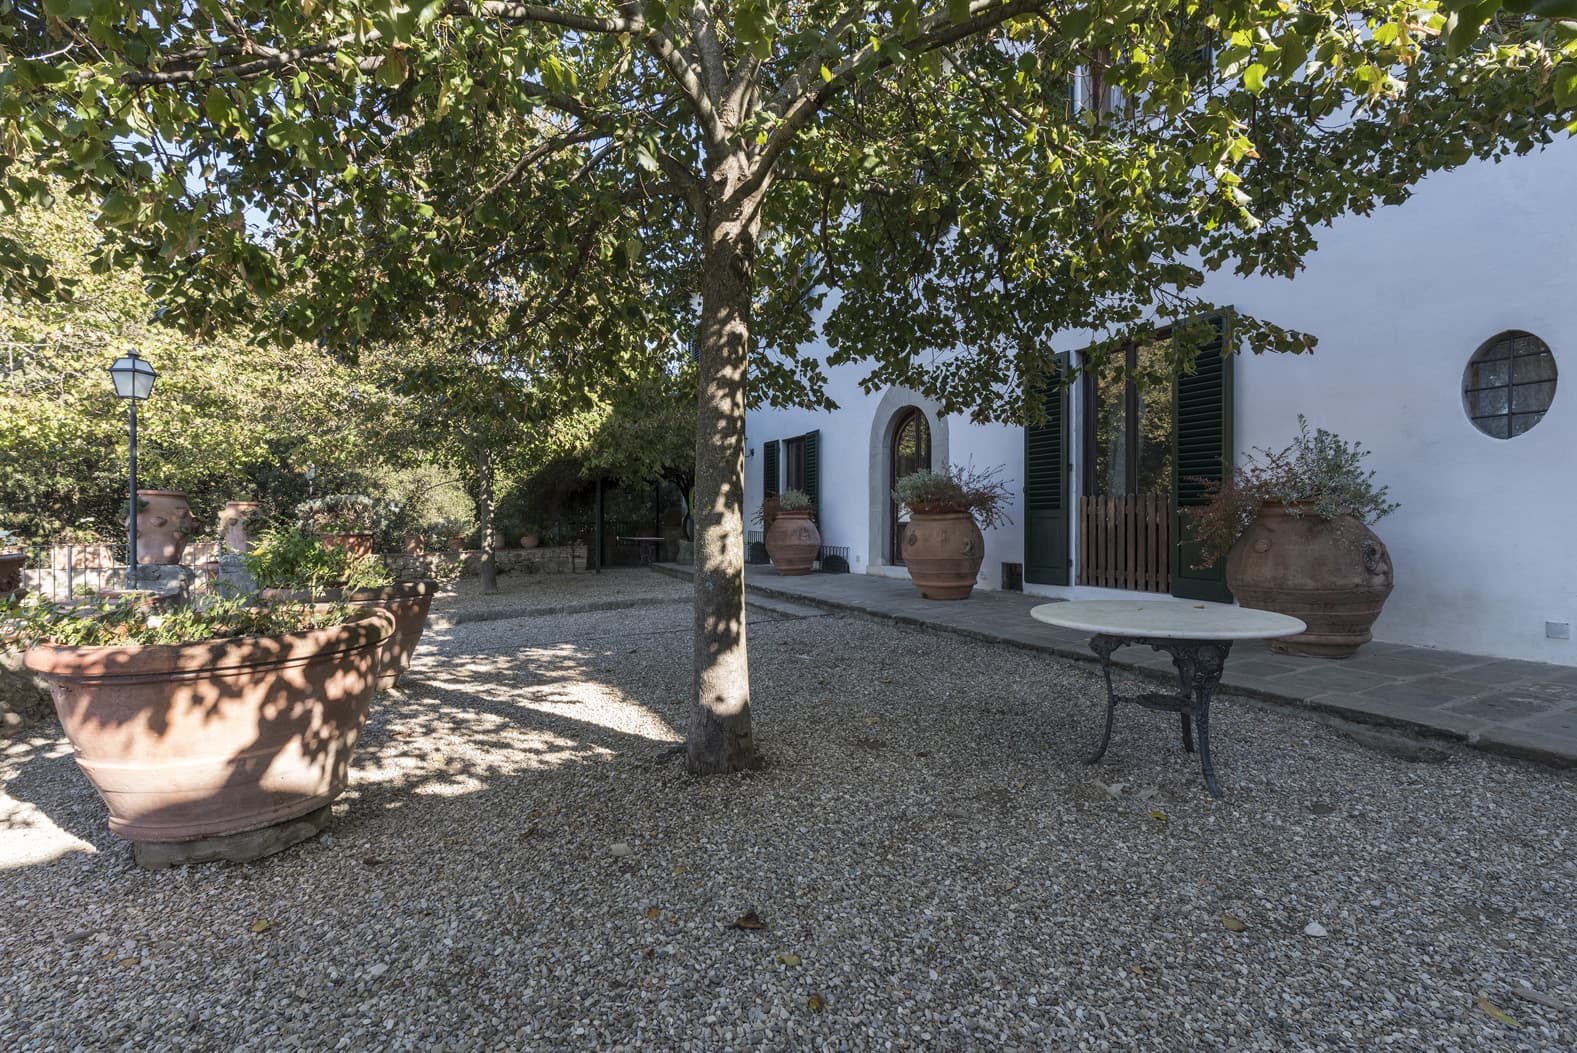  Bedroom Villa For Sale Borgo In Chianti Lp0793 1ee80c0817b67800.jpg